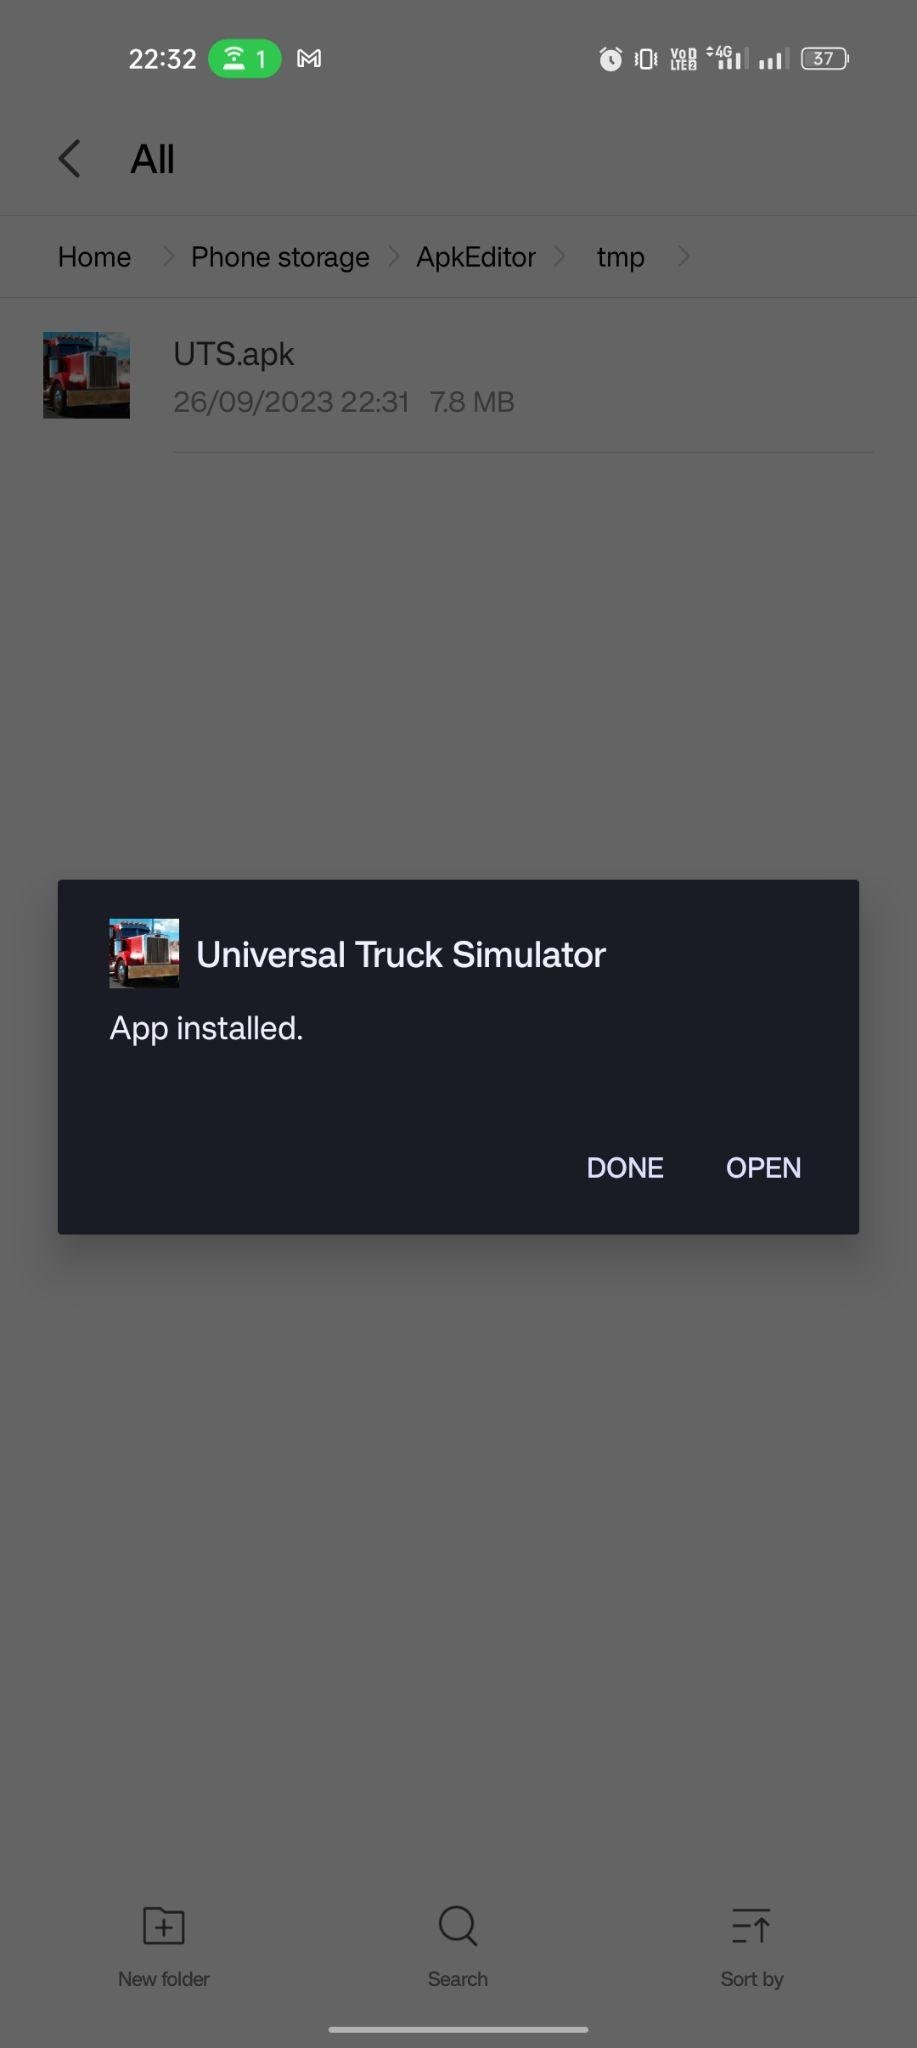 Universal Truck Simulator apk installed